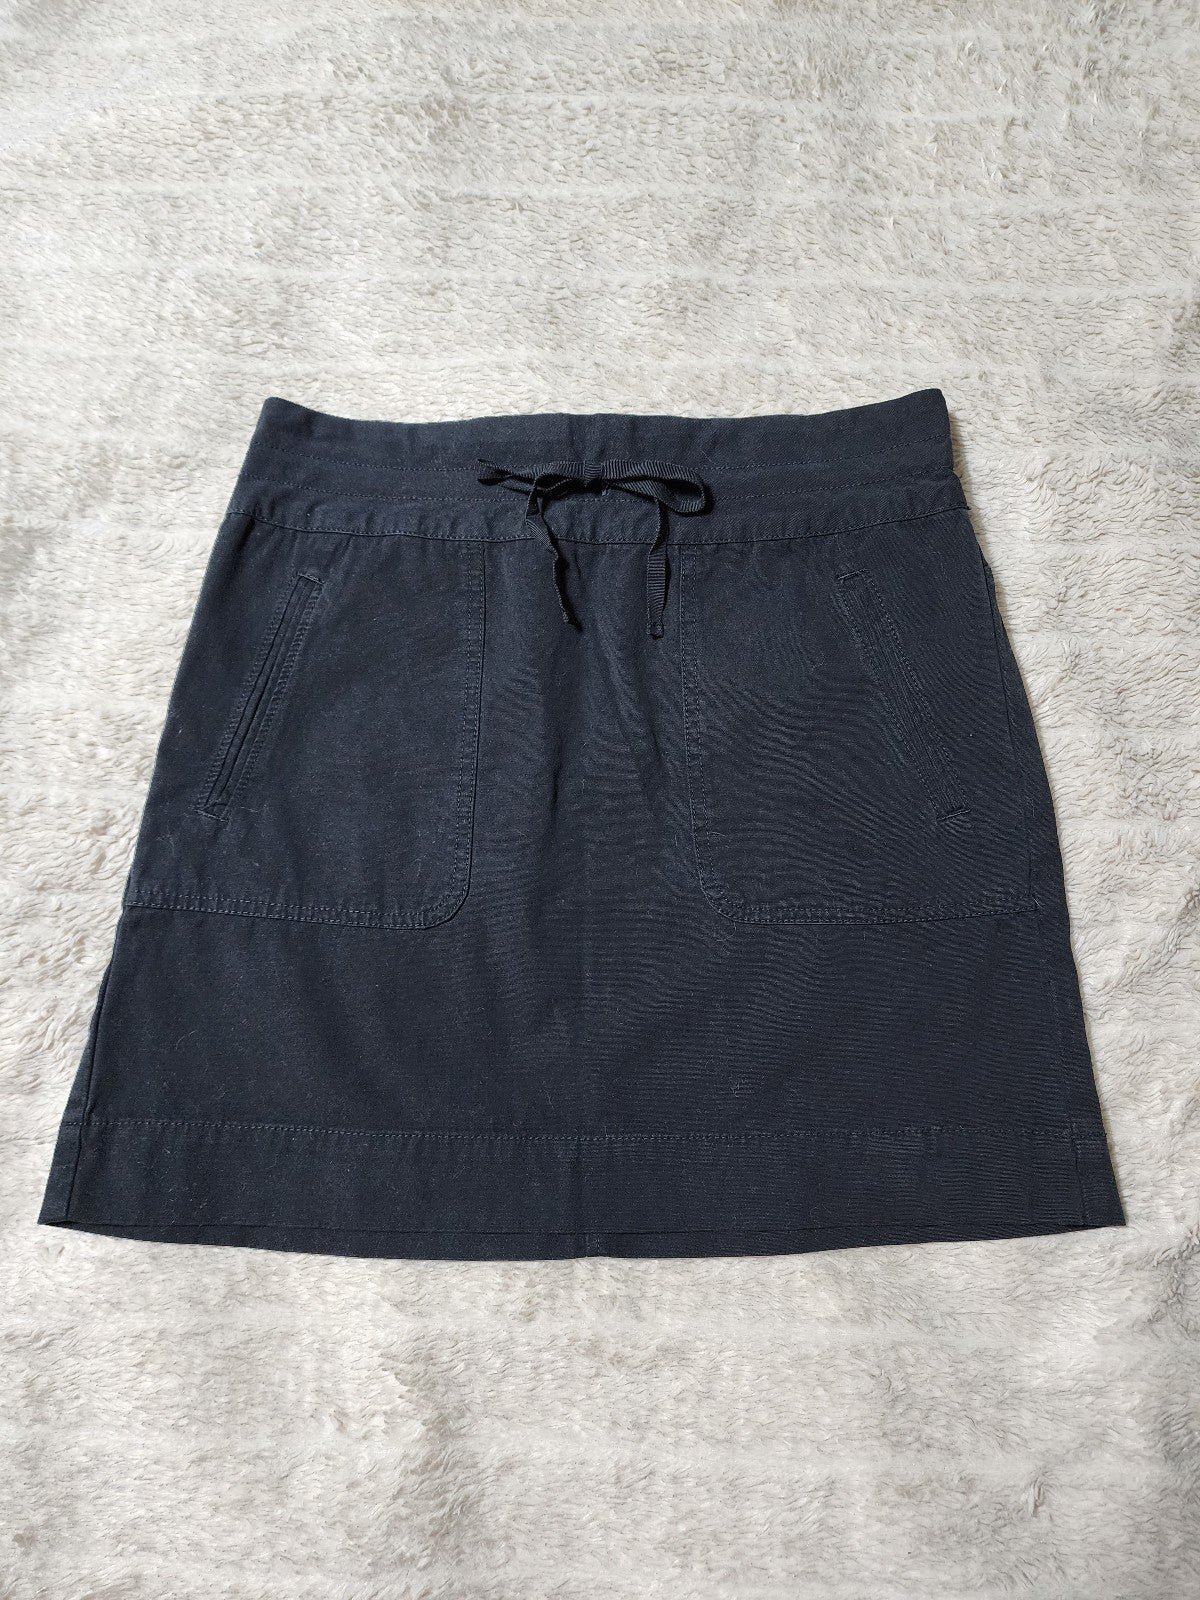 Buy NWT Women´s J.Crew Cotton Black Mini Skirt jOQ